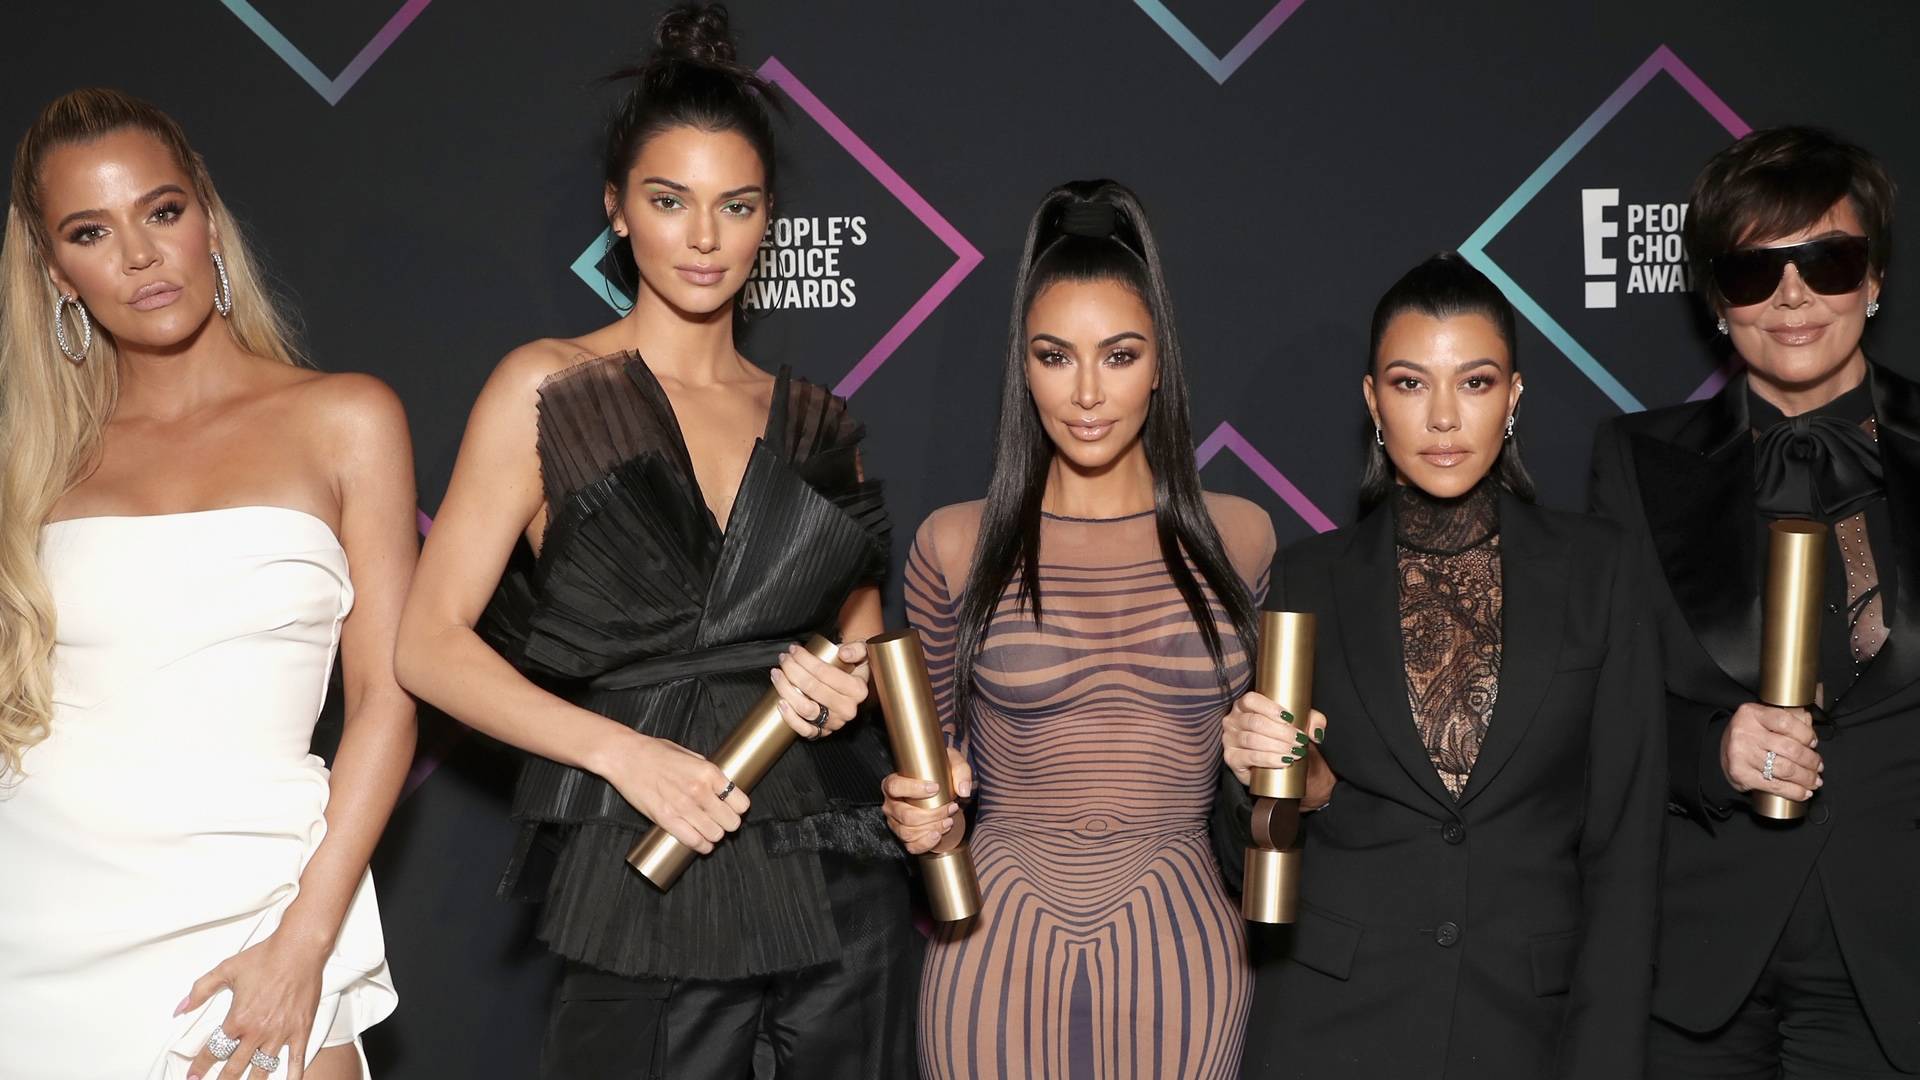 Khloe Kardashian, Kendall Jenner, Kim Kardashian West, Kourtney Kardashian and Kris Jenner on BET Buzz 2020.